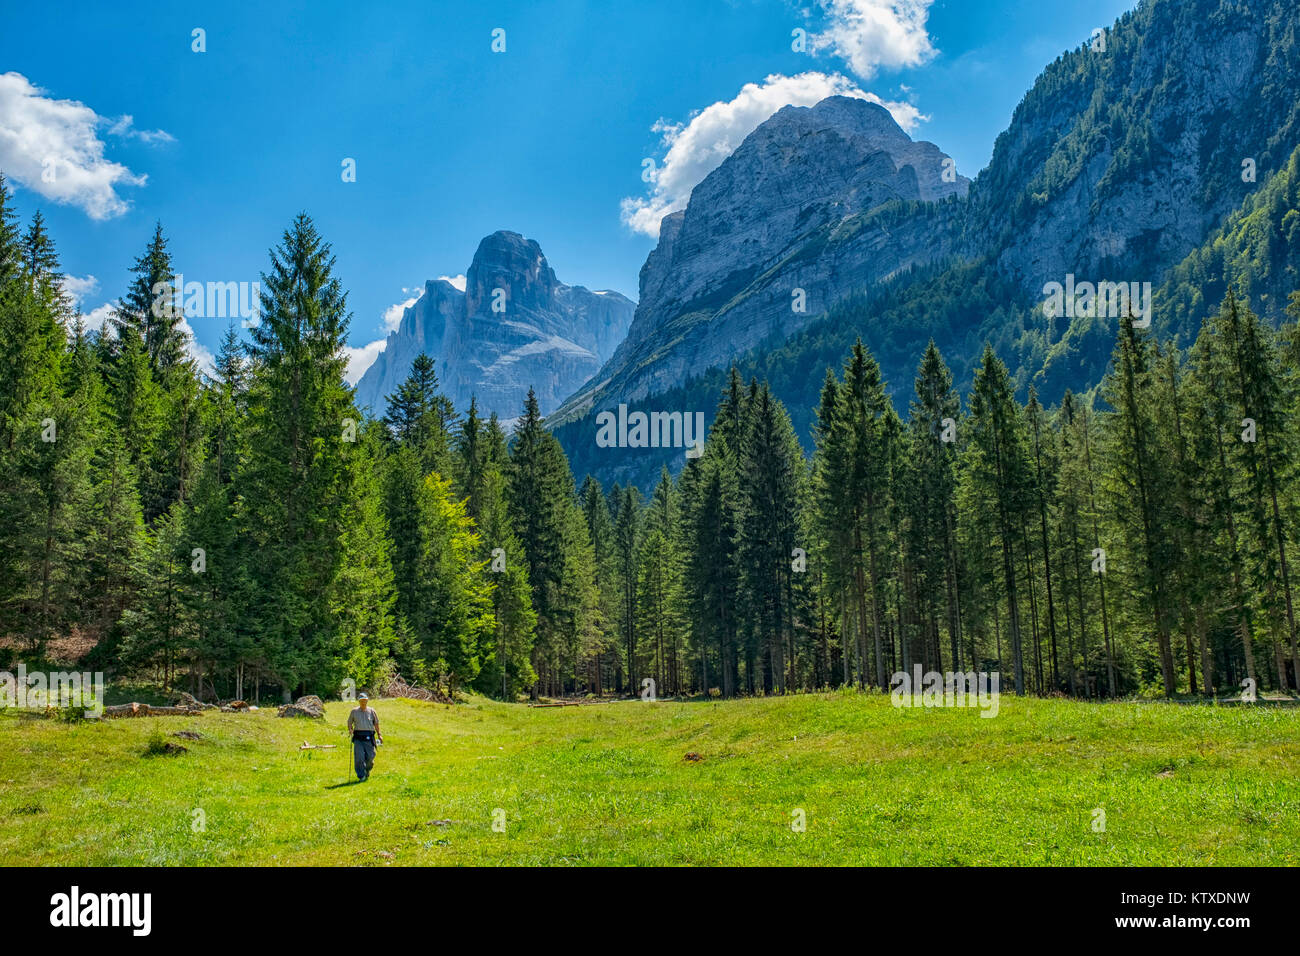 Chaîne de montagnes de Brenta, vallée de Rendena, Trentin, Italie, Europe Banque D'Images